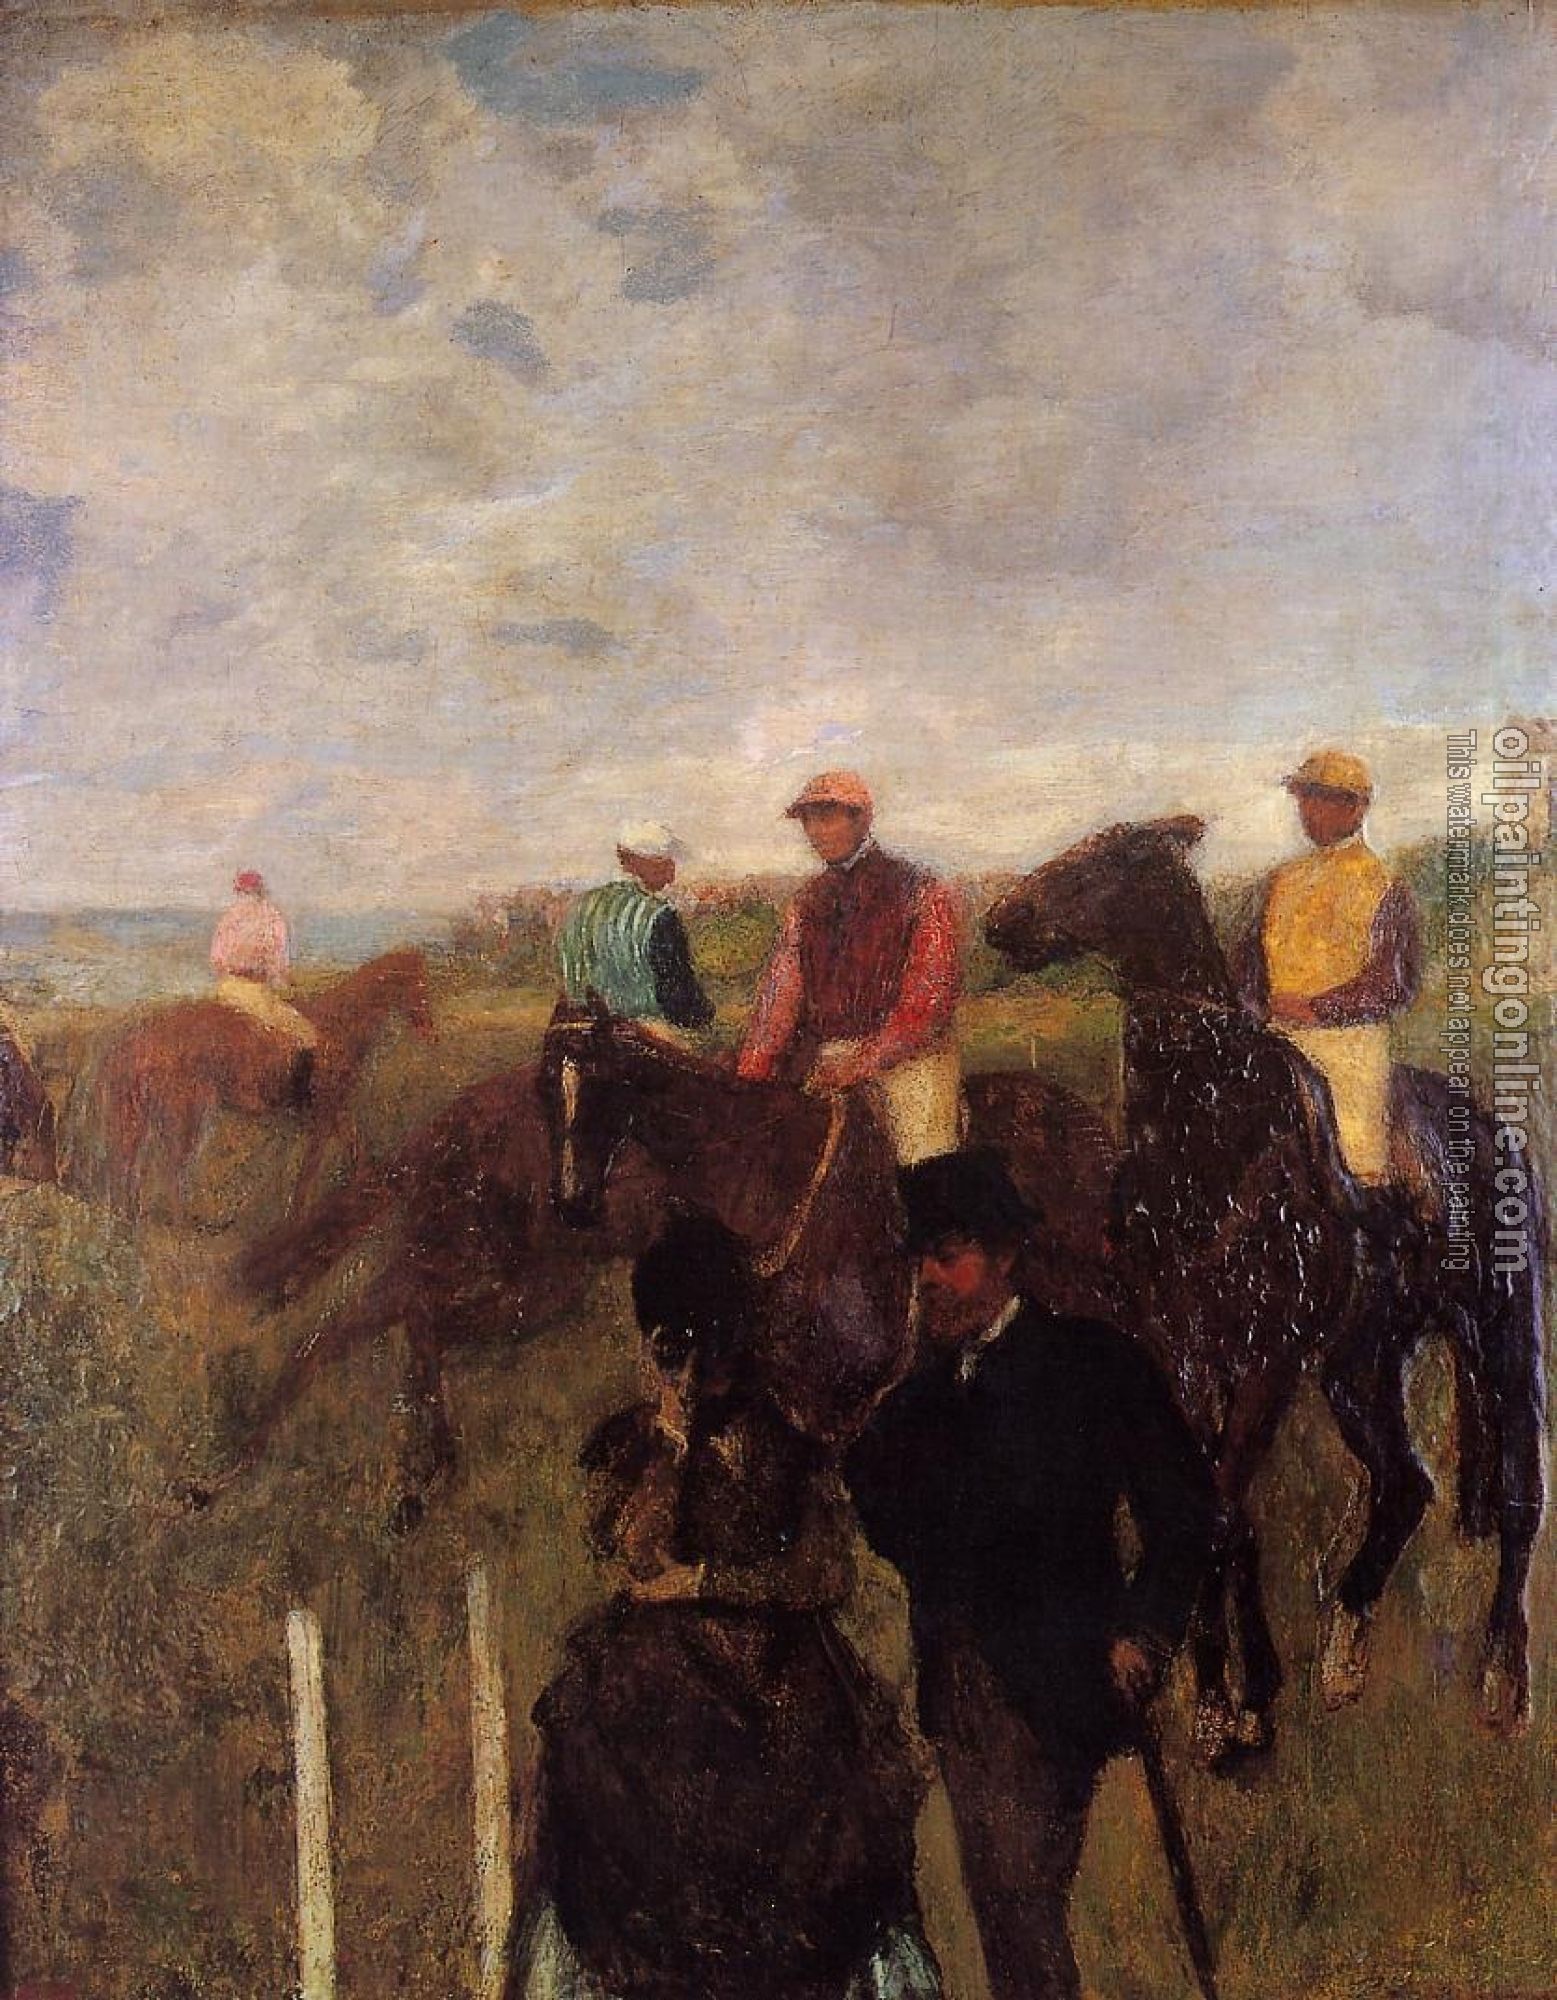 Degas, Edgar - At the Races